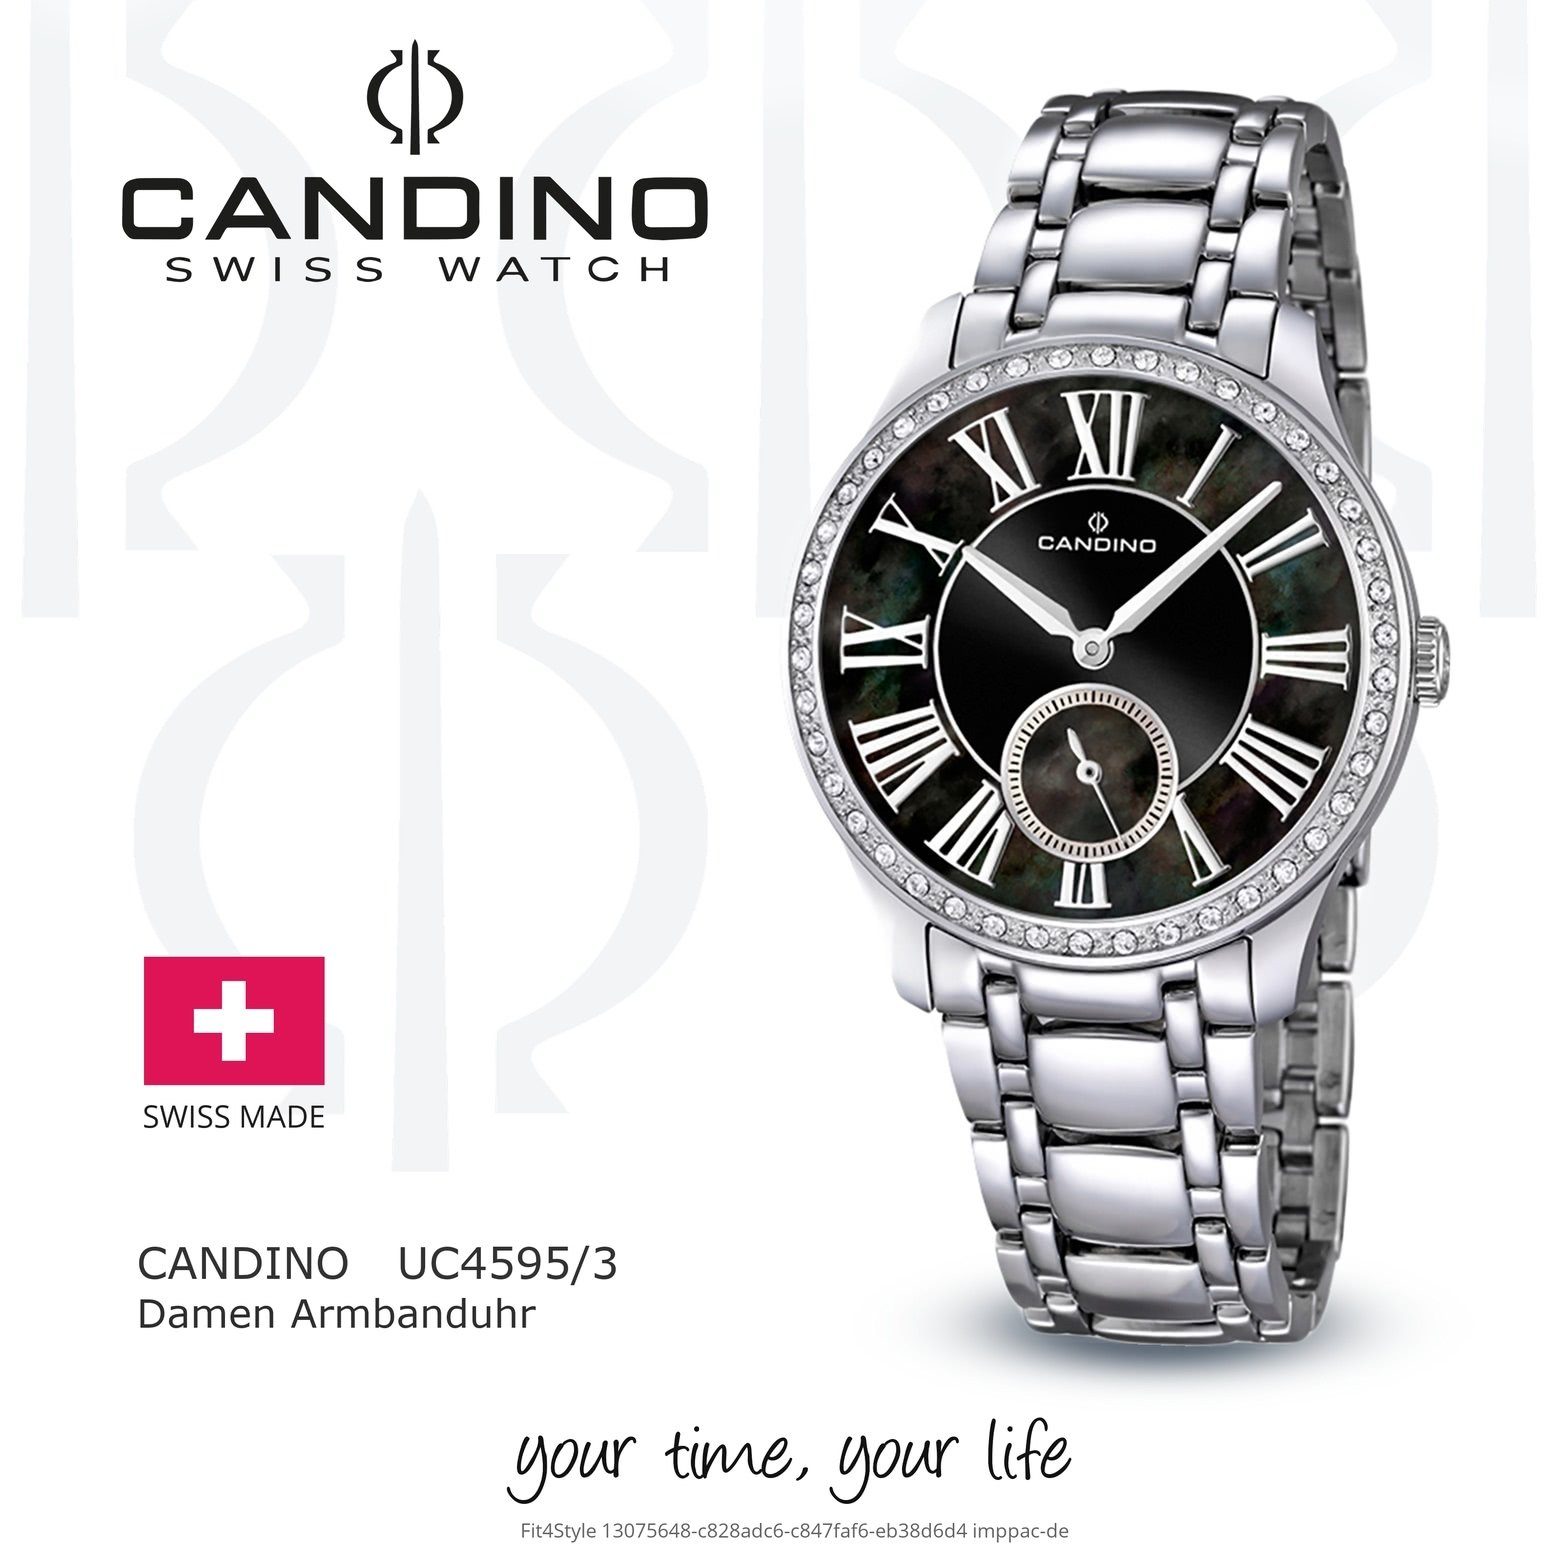 Edelstahlarmband Damen Damen Candino silber, C4595/3, Uhr Fashion rund, Analog Armbanduhr Quarzuhr Candino